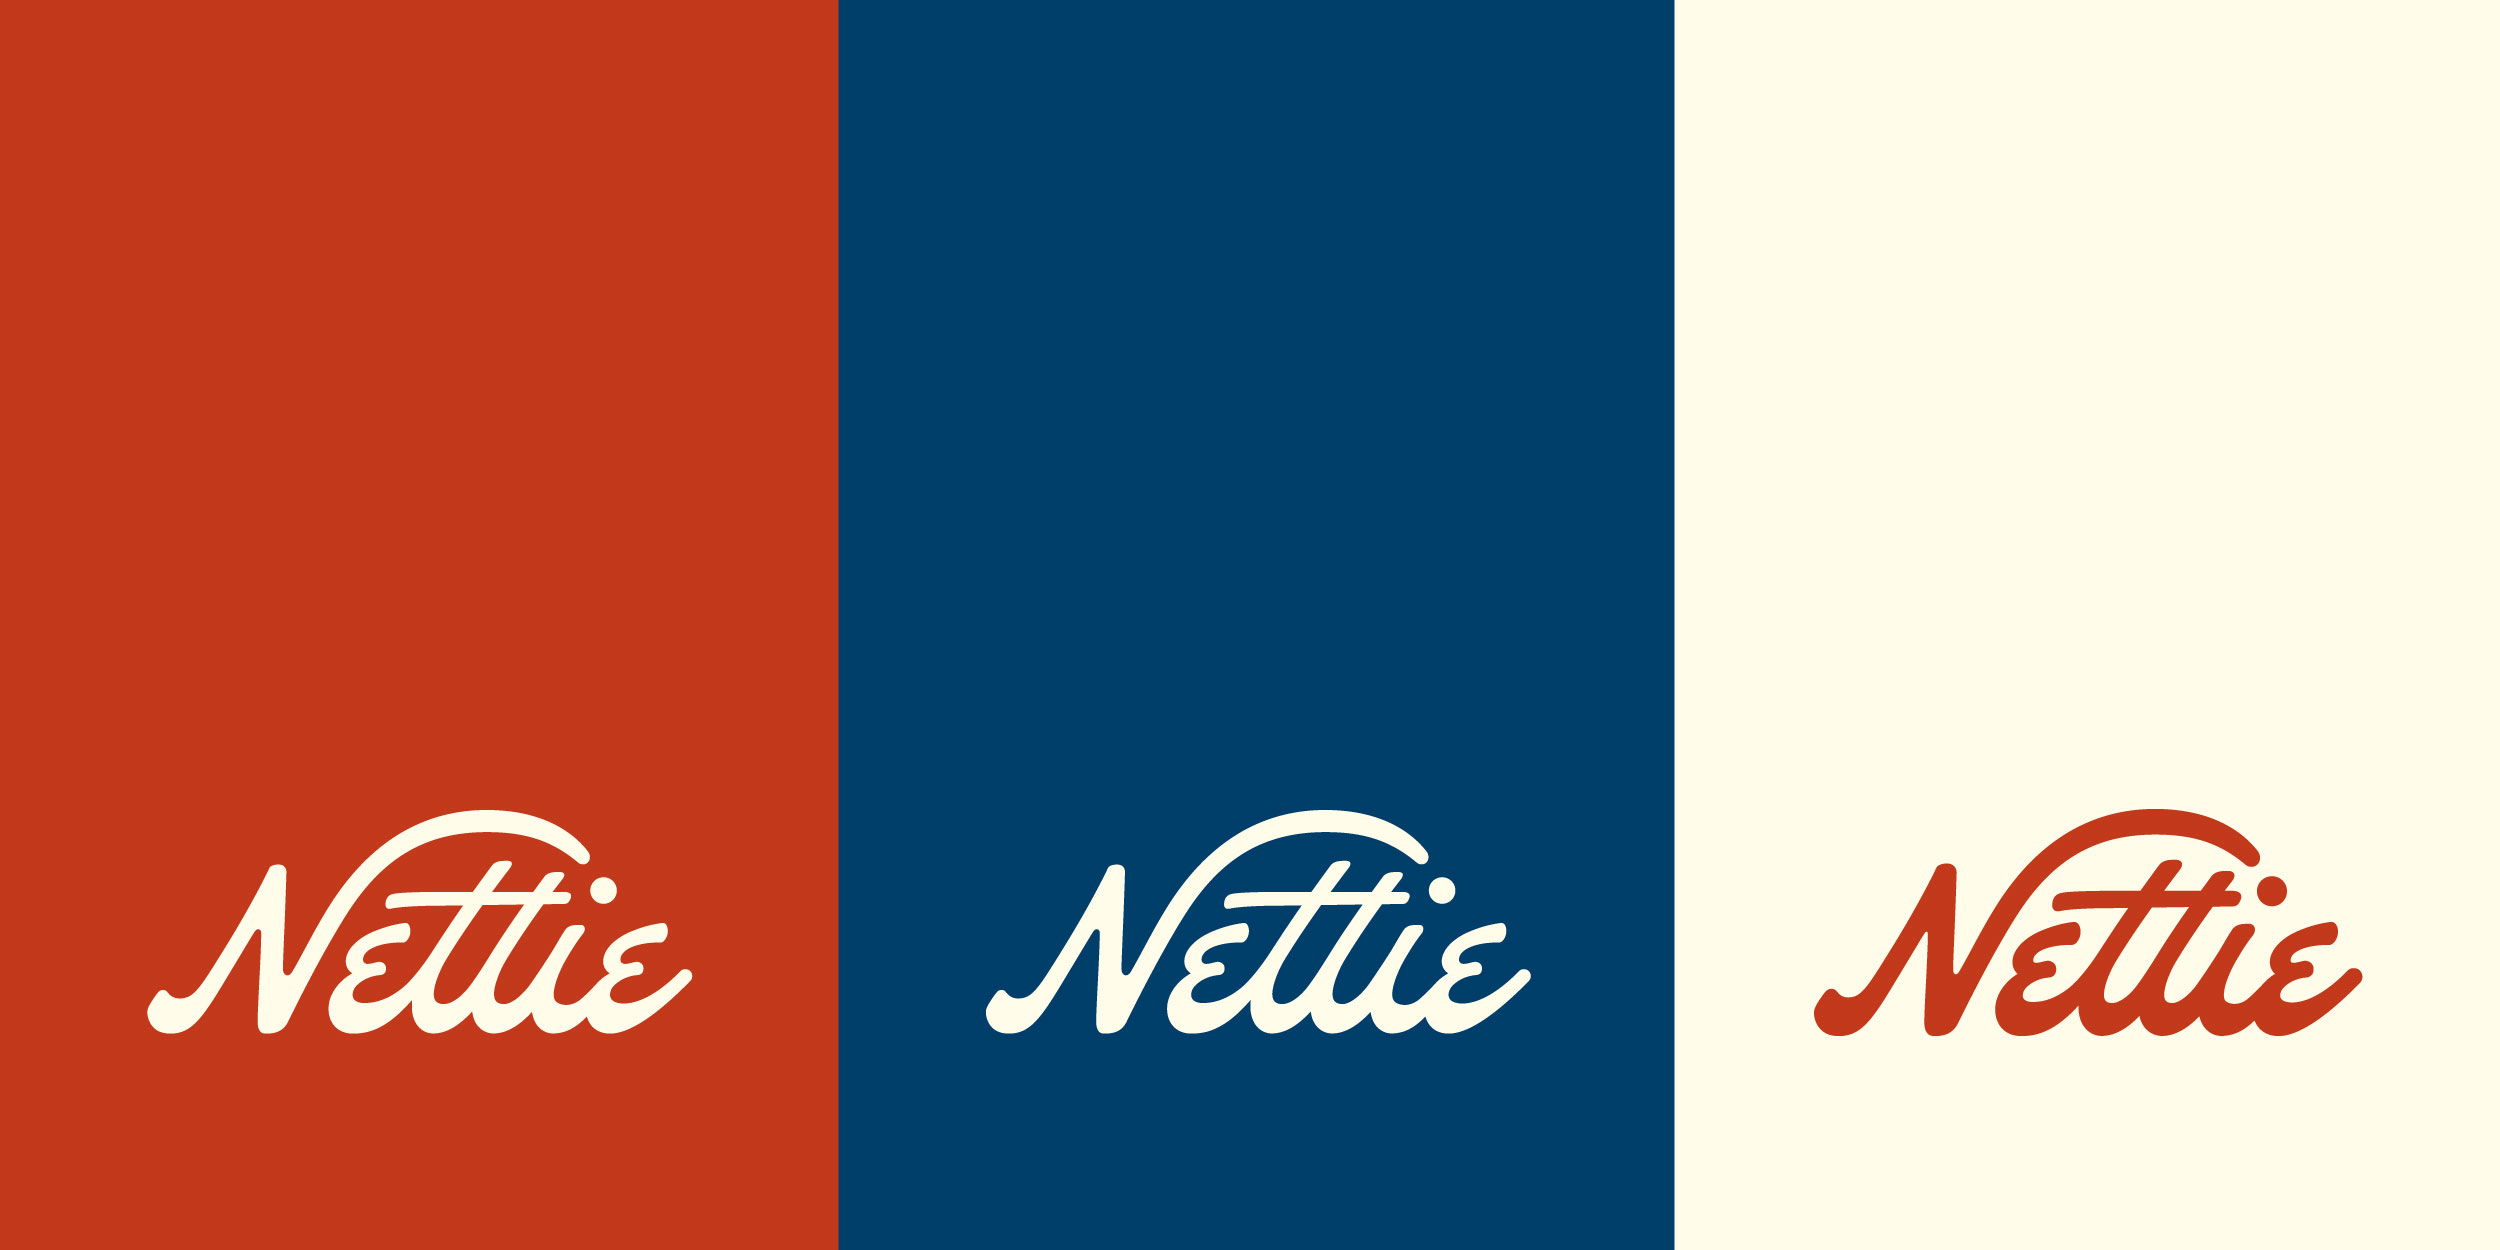 Nettie logos on color